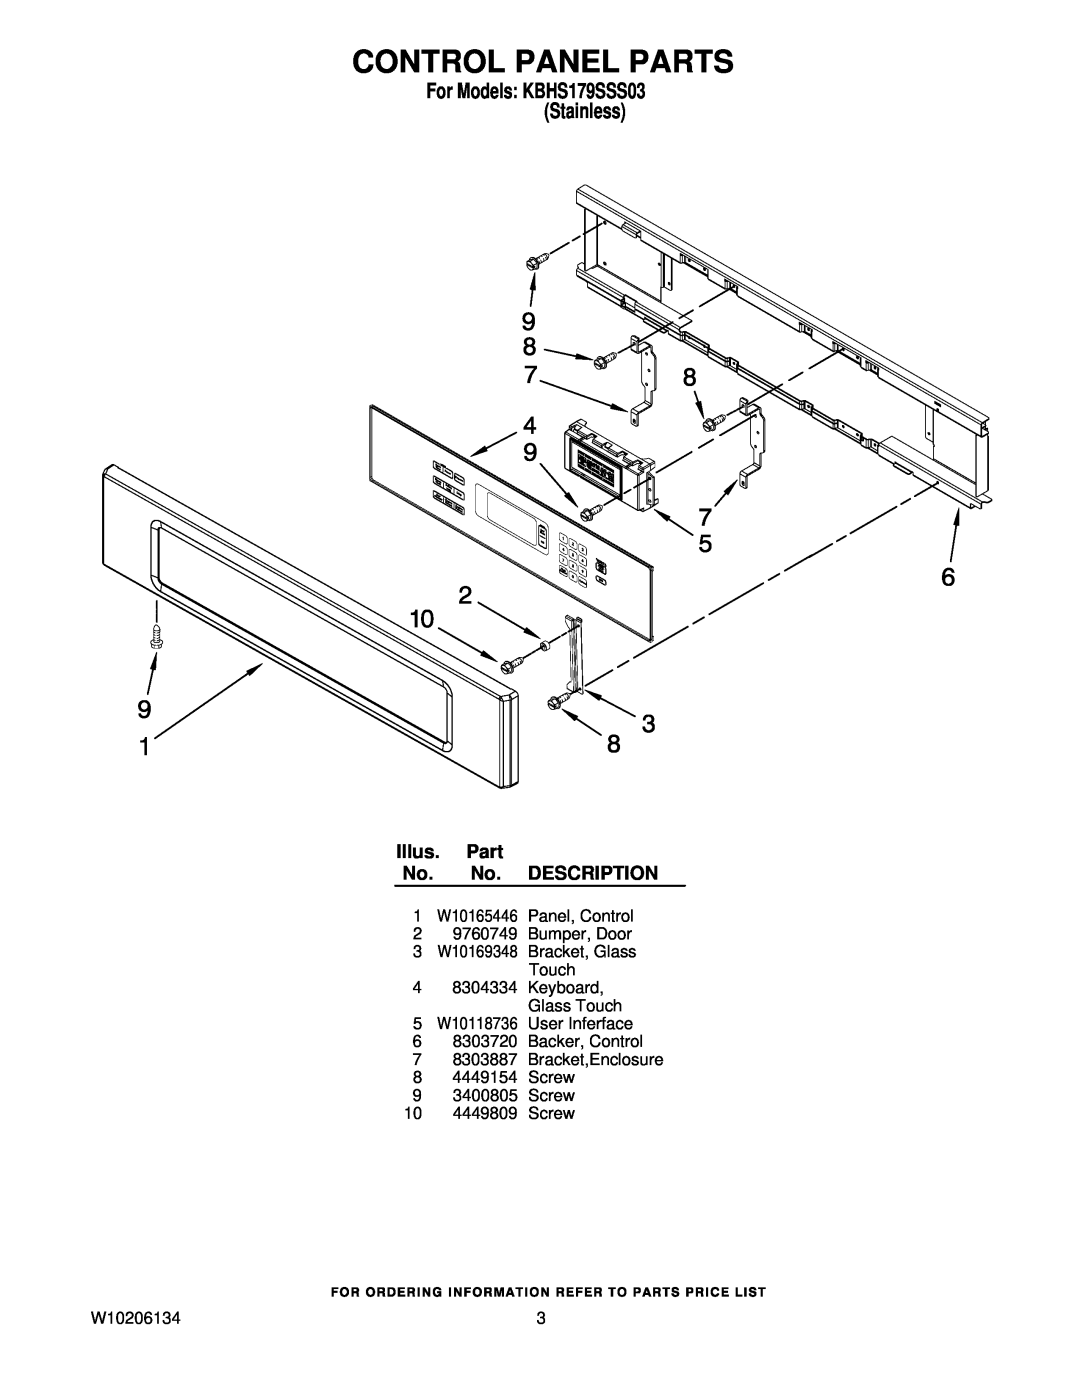 KitchenAid W10206134 manual Control Panel Parts, Illus. Part No. No. DESCRIPTION, For Models KBHS179SSS03 Stainless 